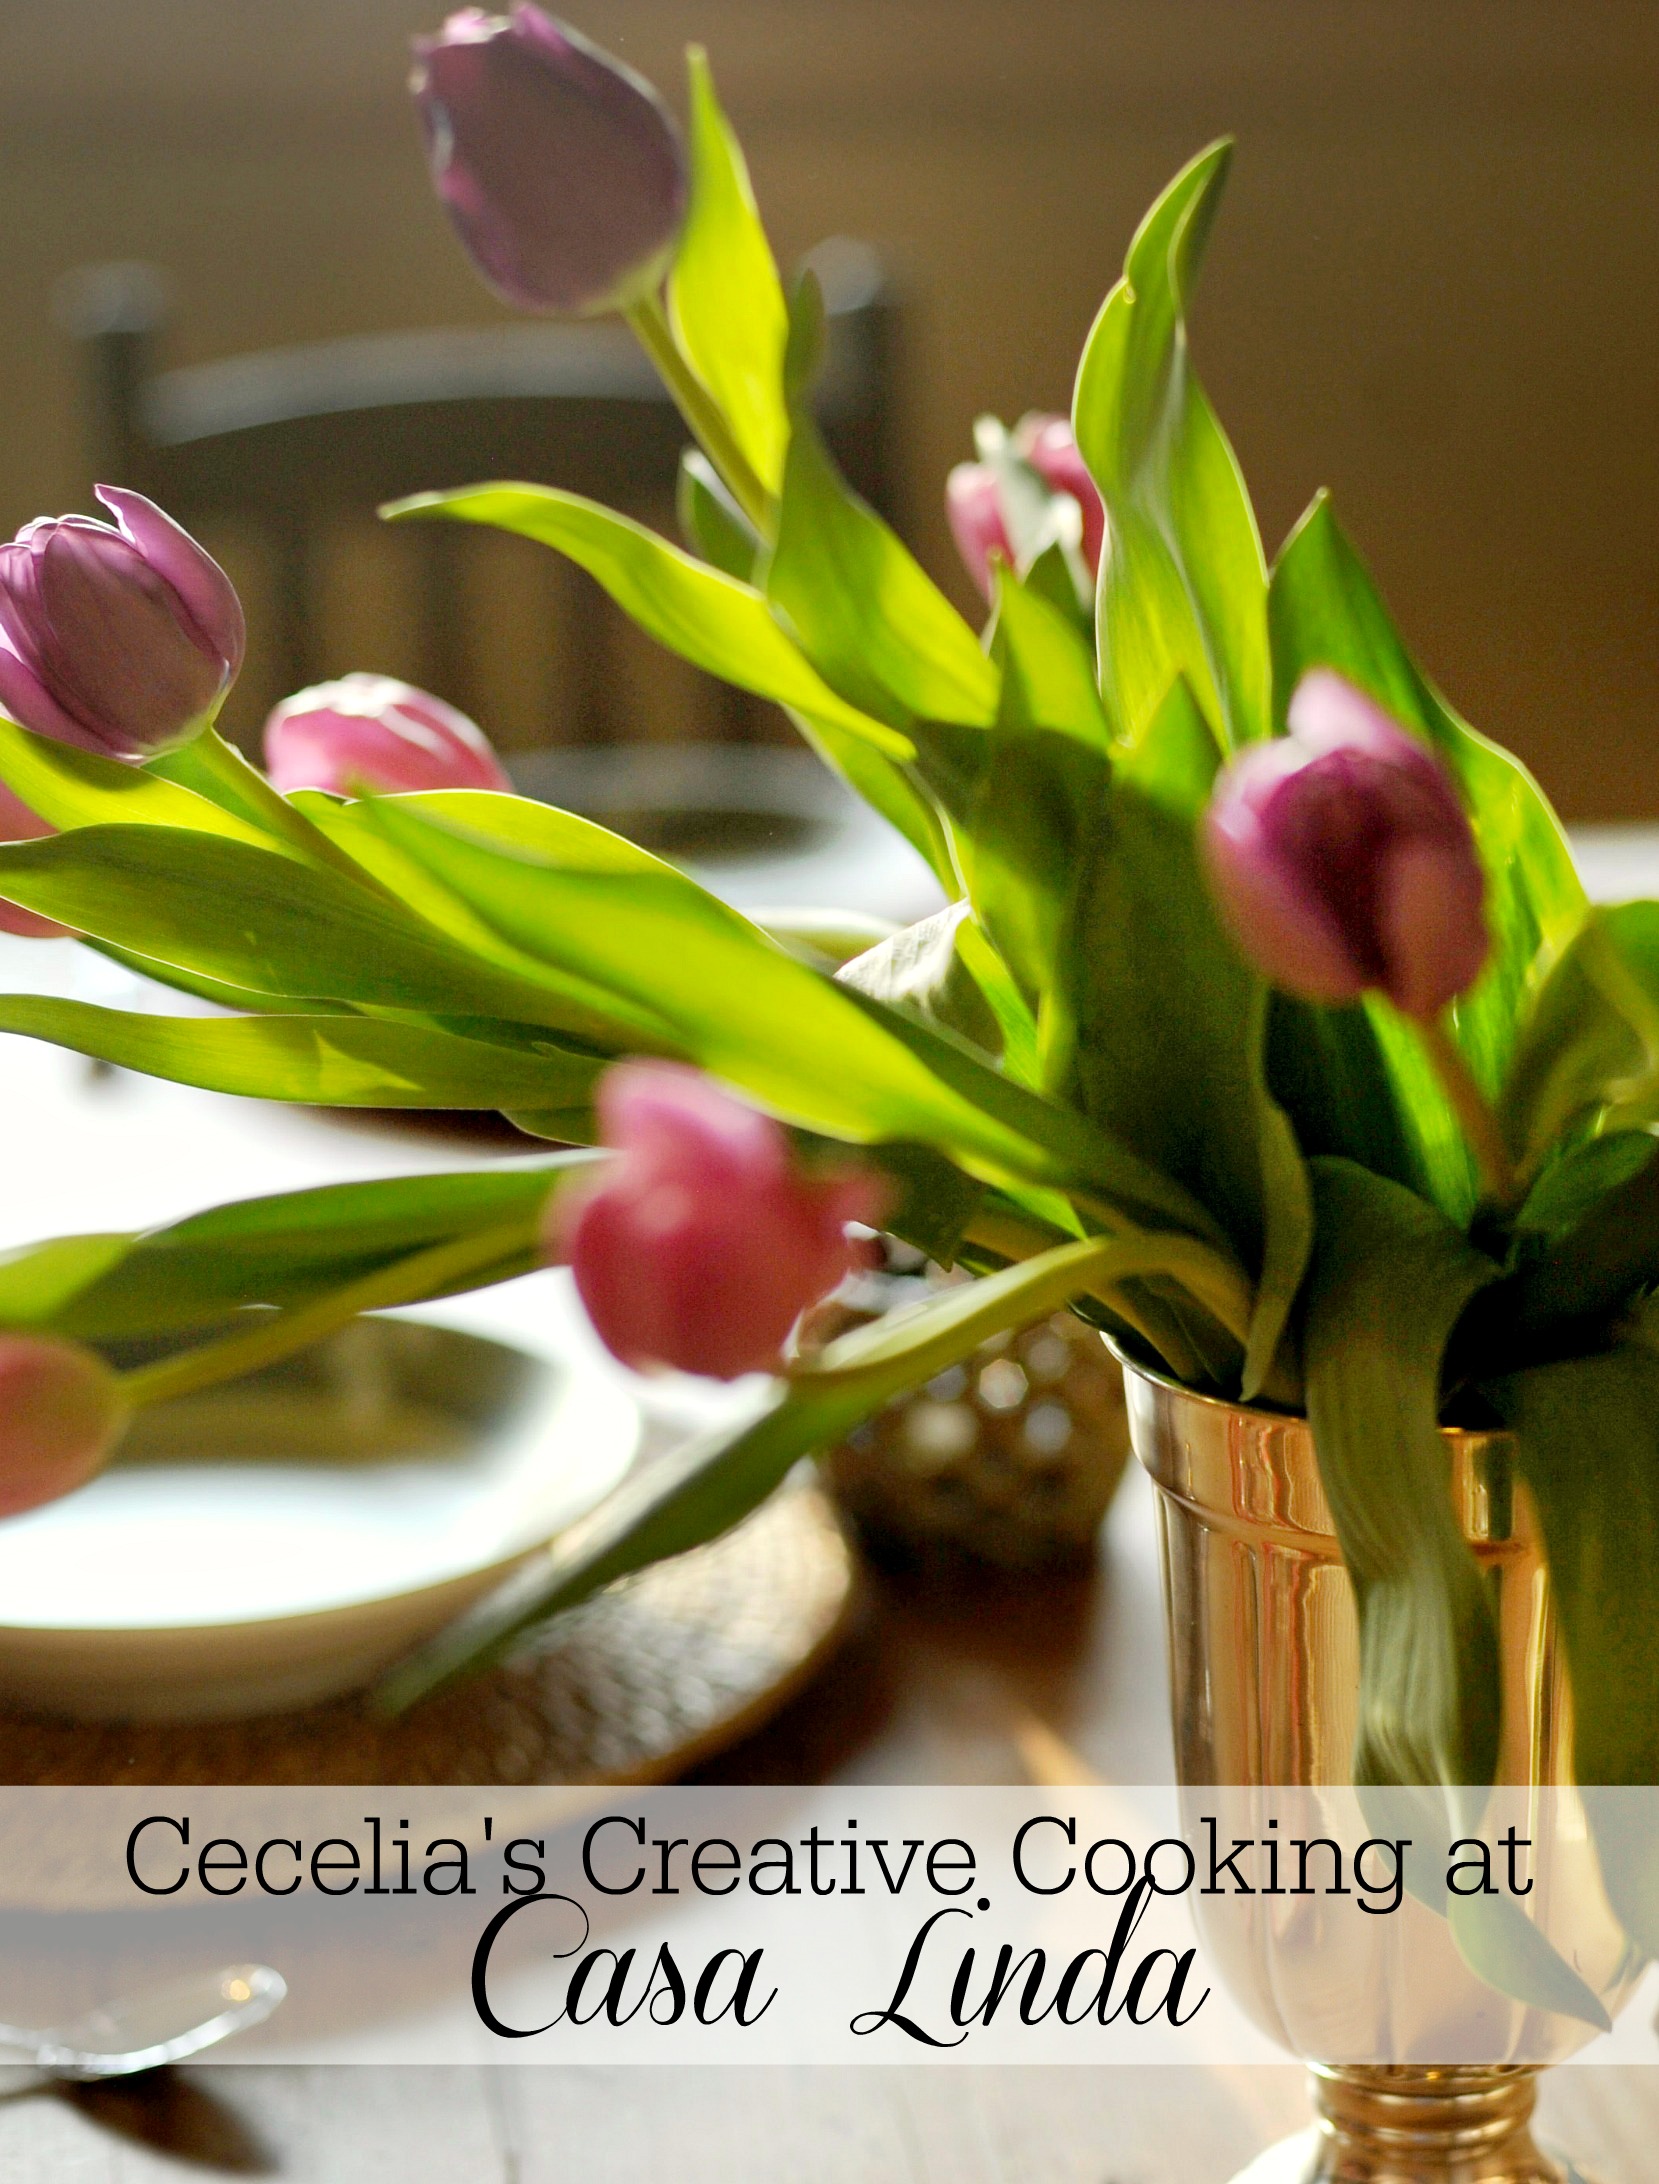 "Cecelia's Creative Cooking at Casa Linda"